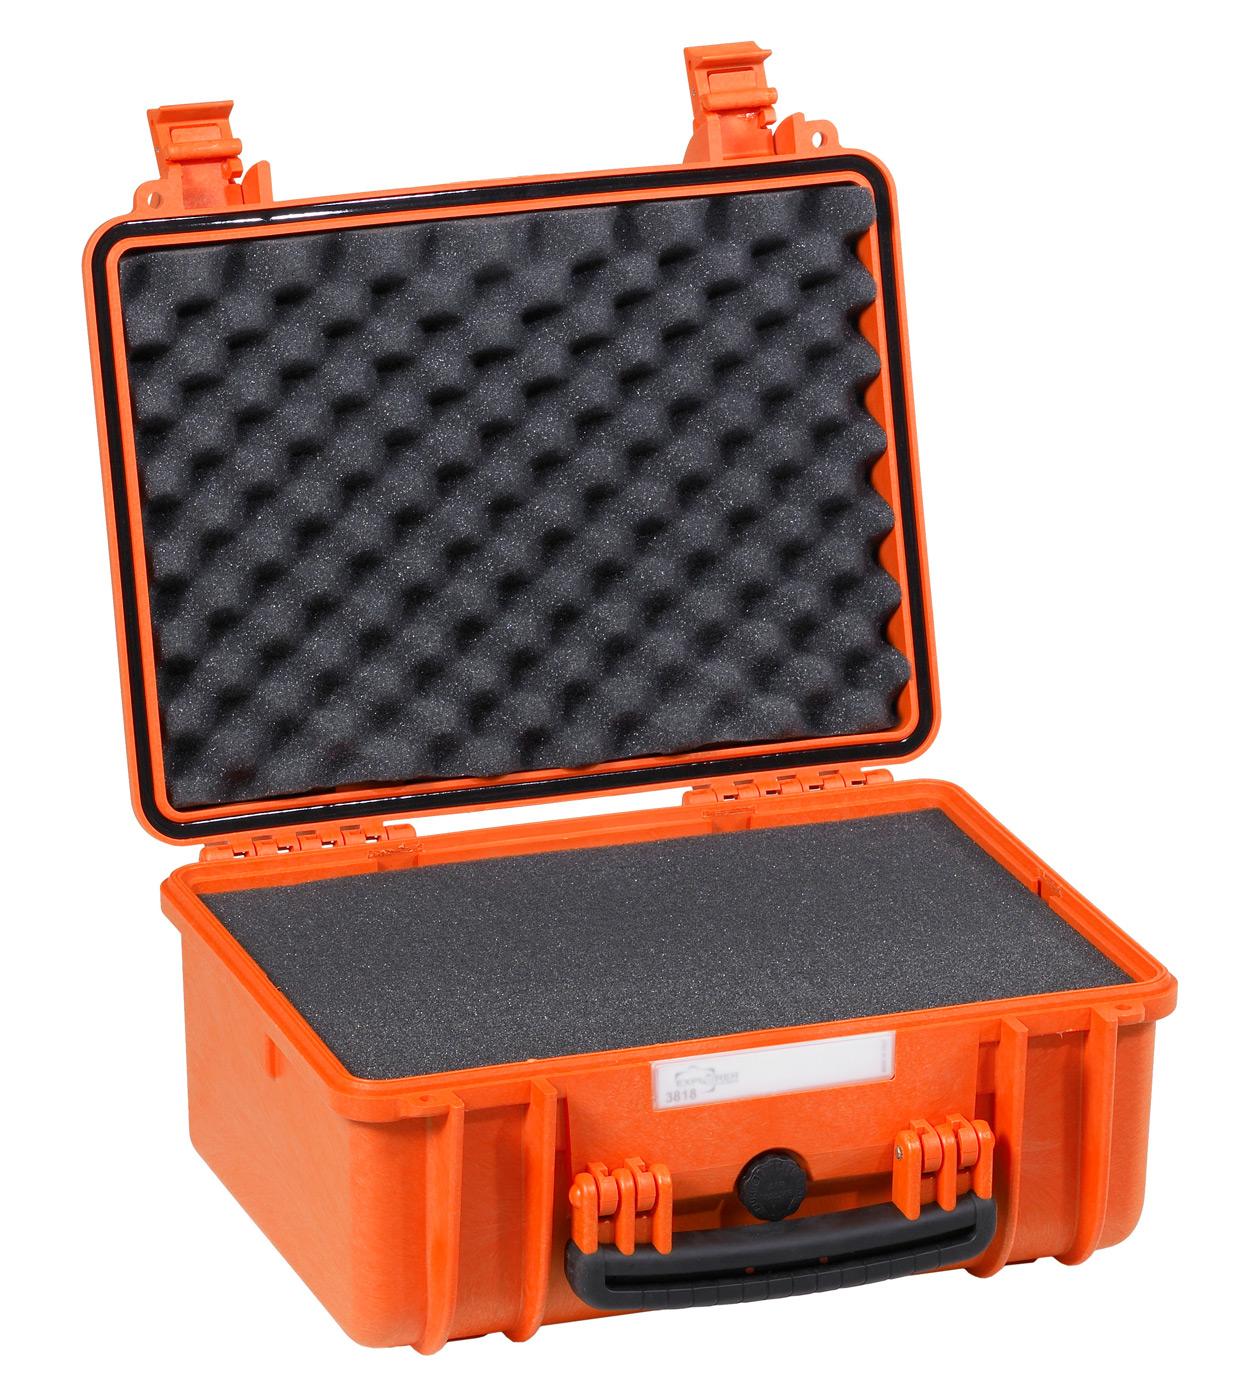 Maleta Explorer Cases 3818 color naranja | Maletas Estancas